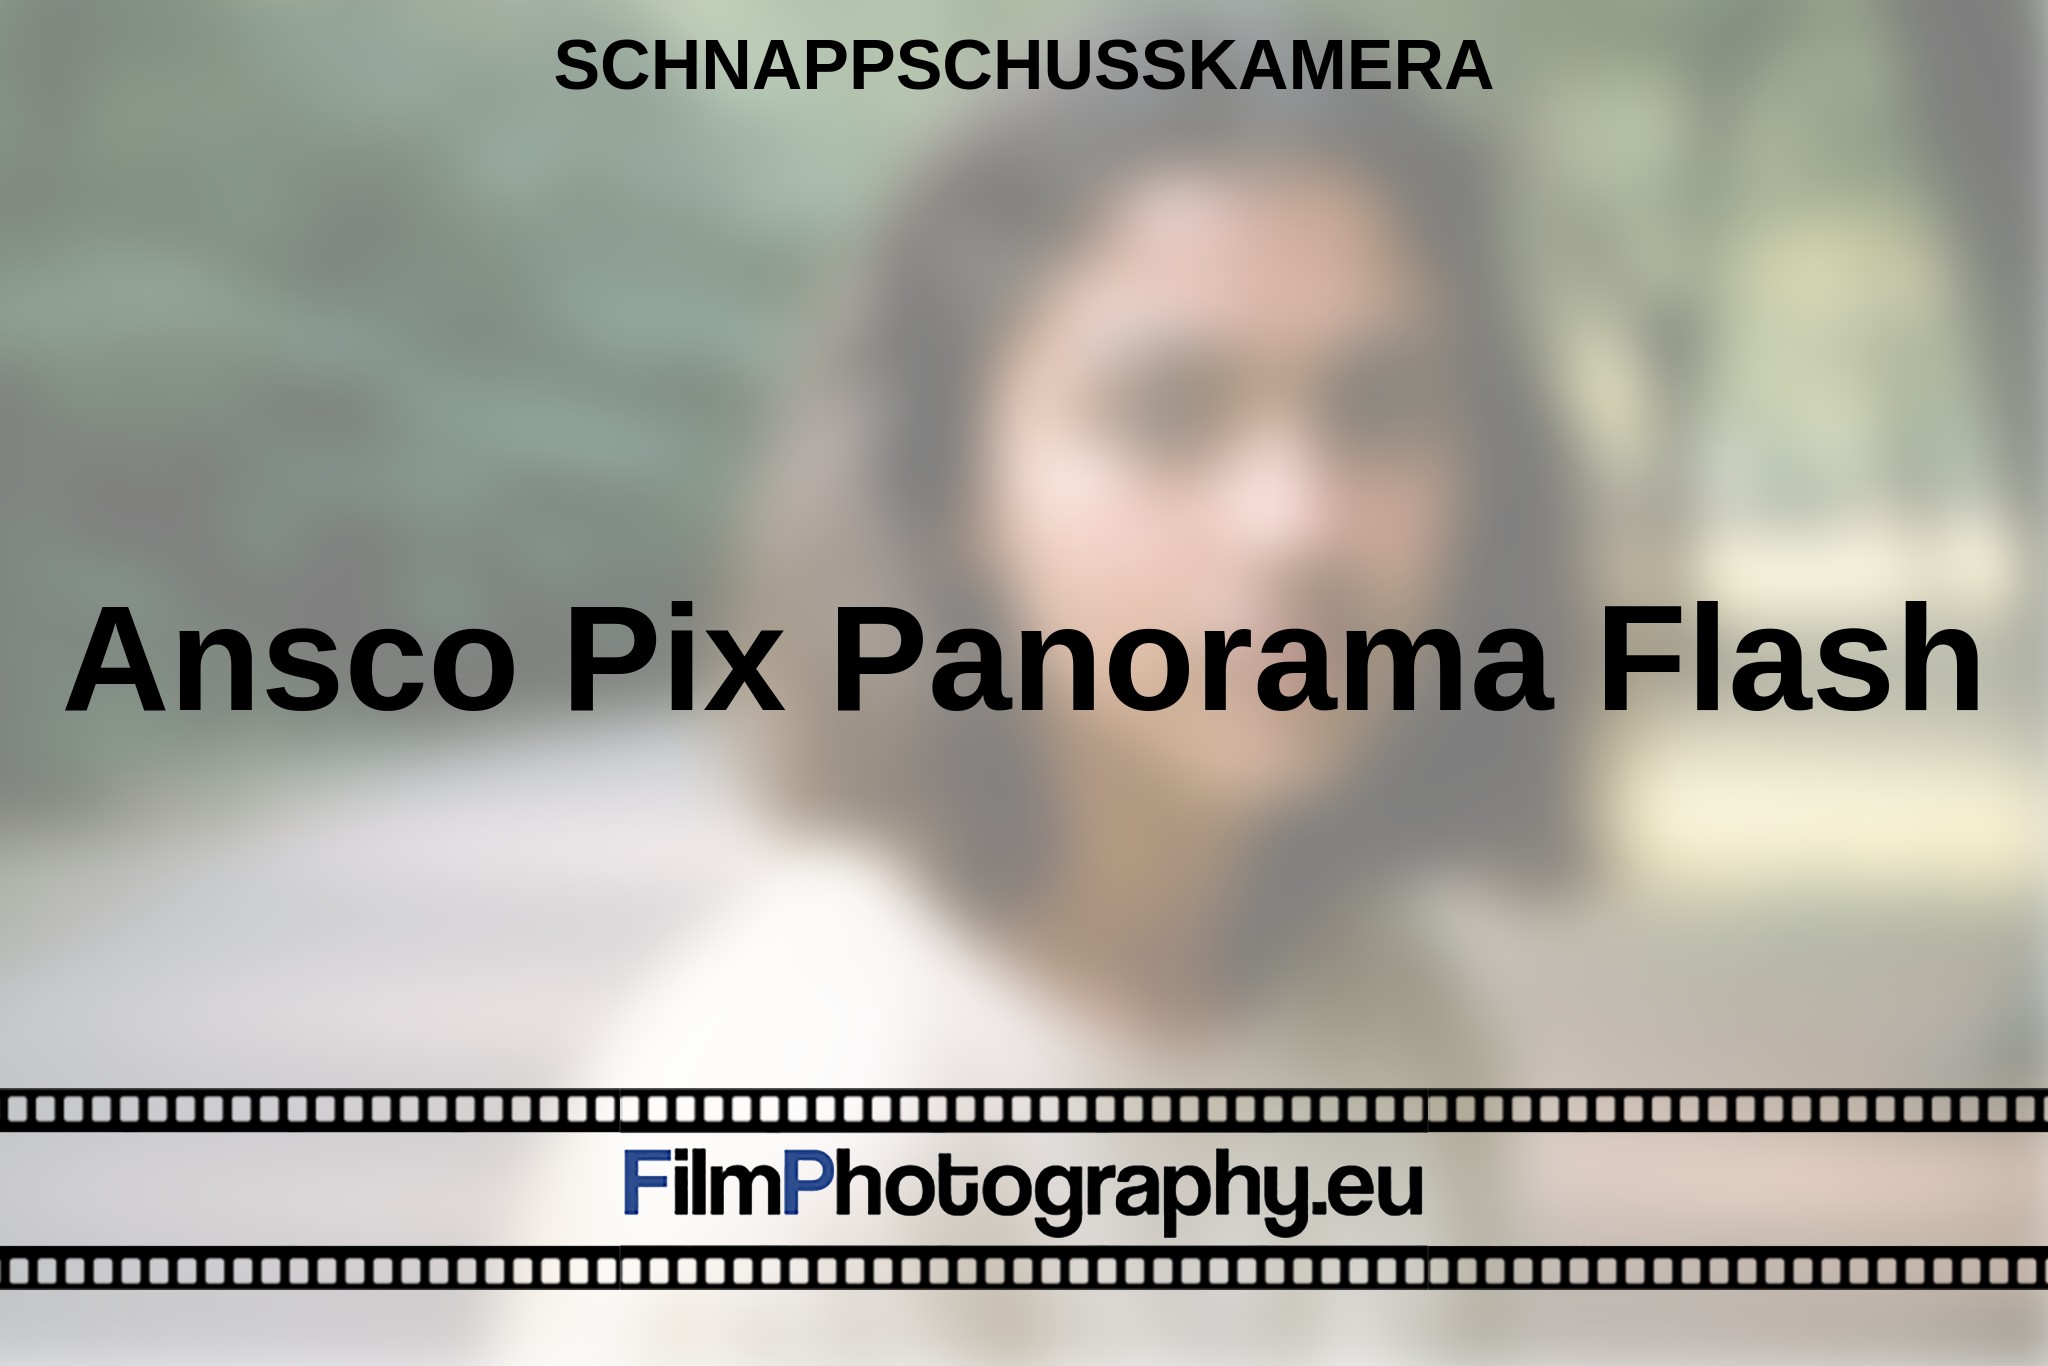 ansco-pix-panorama-flash-schnappschusskamera-bnv.jpg